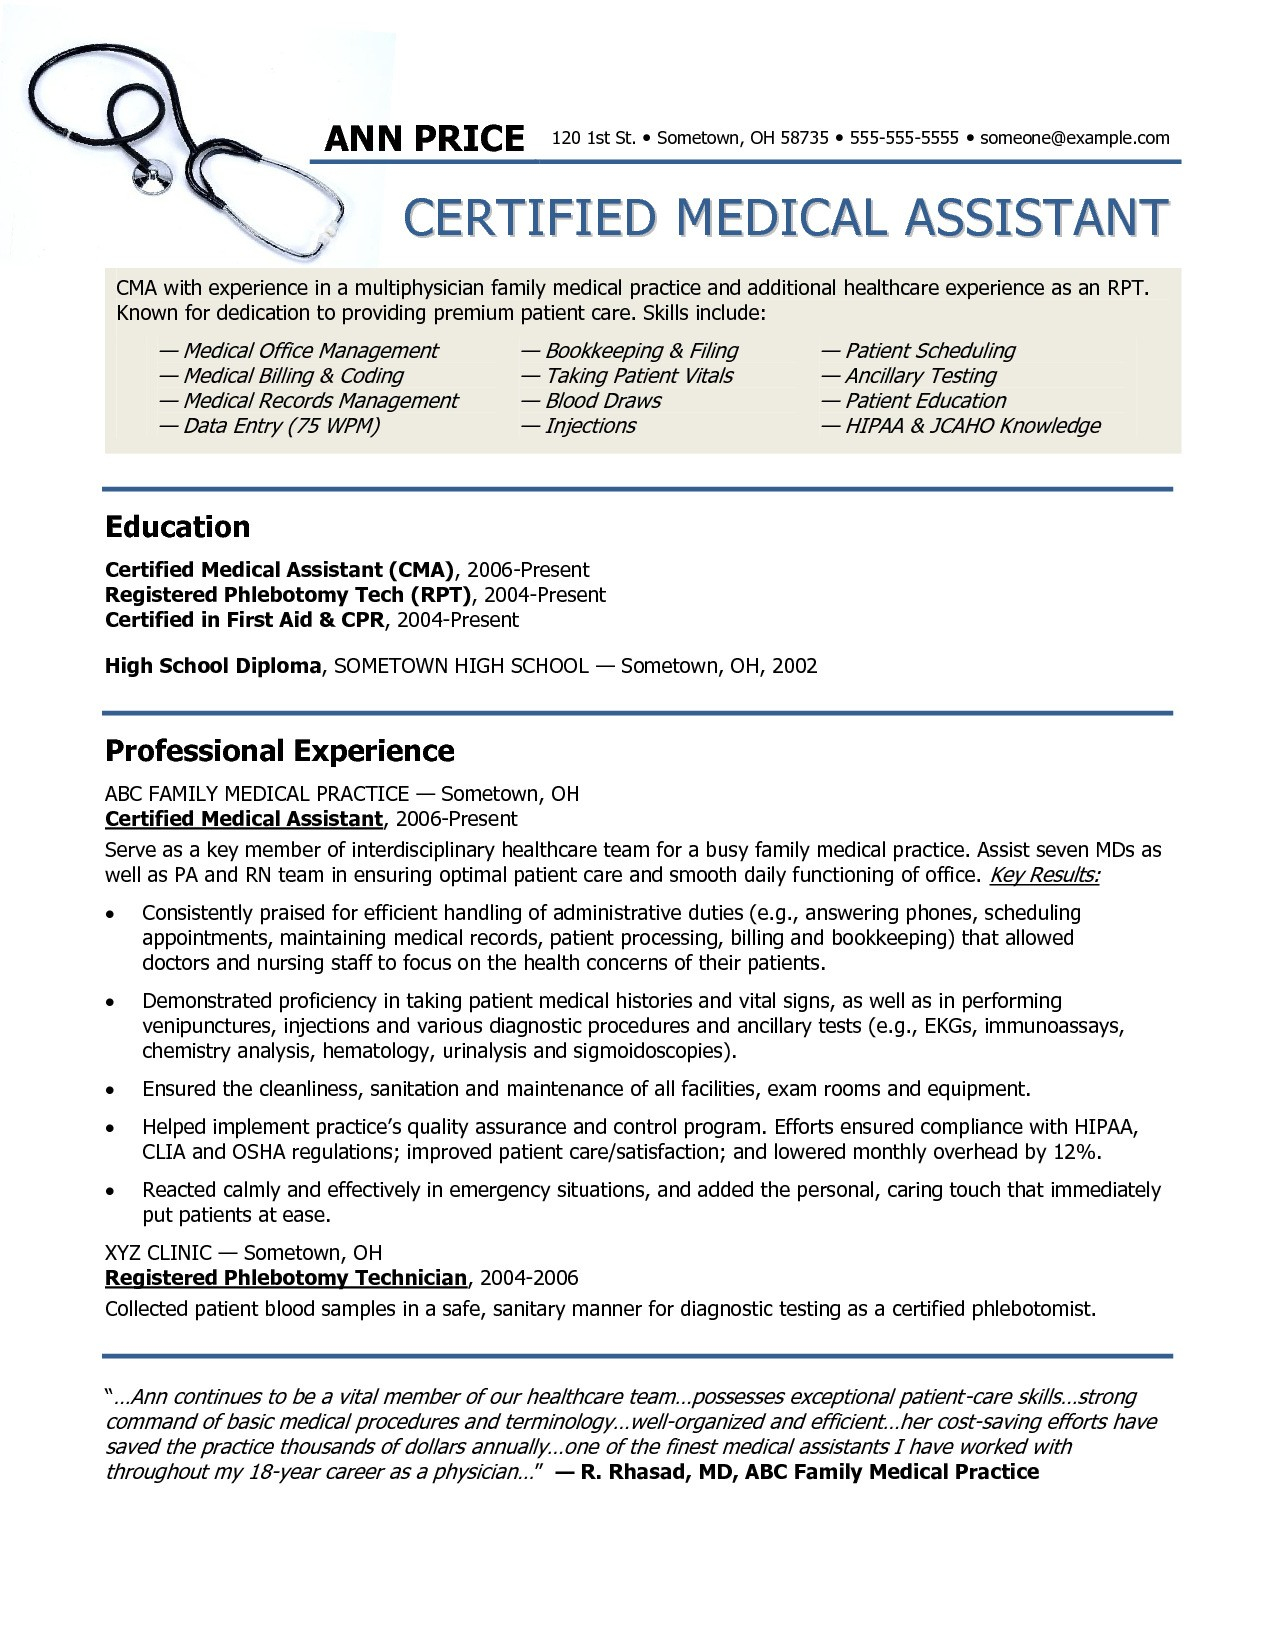 job duties on resumes - Sablon With Regard To Medical Assistant Job Description Template For Medical Assistant Job Description Template